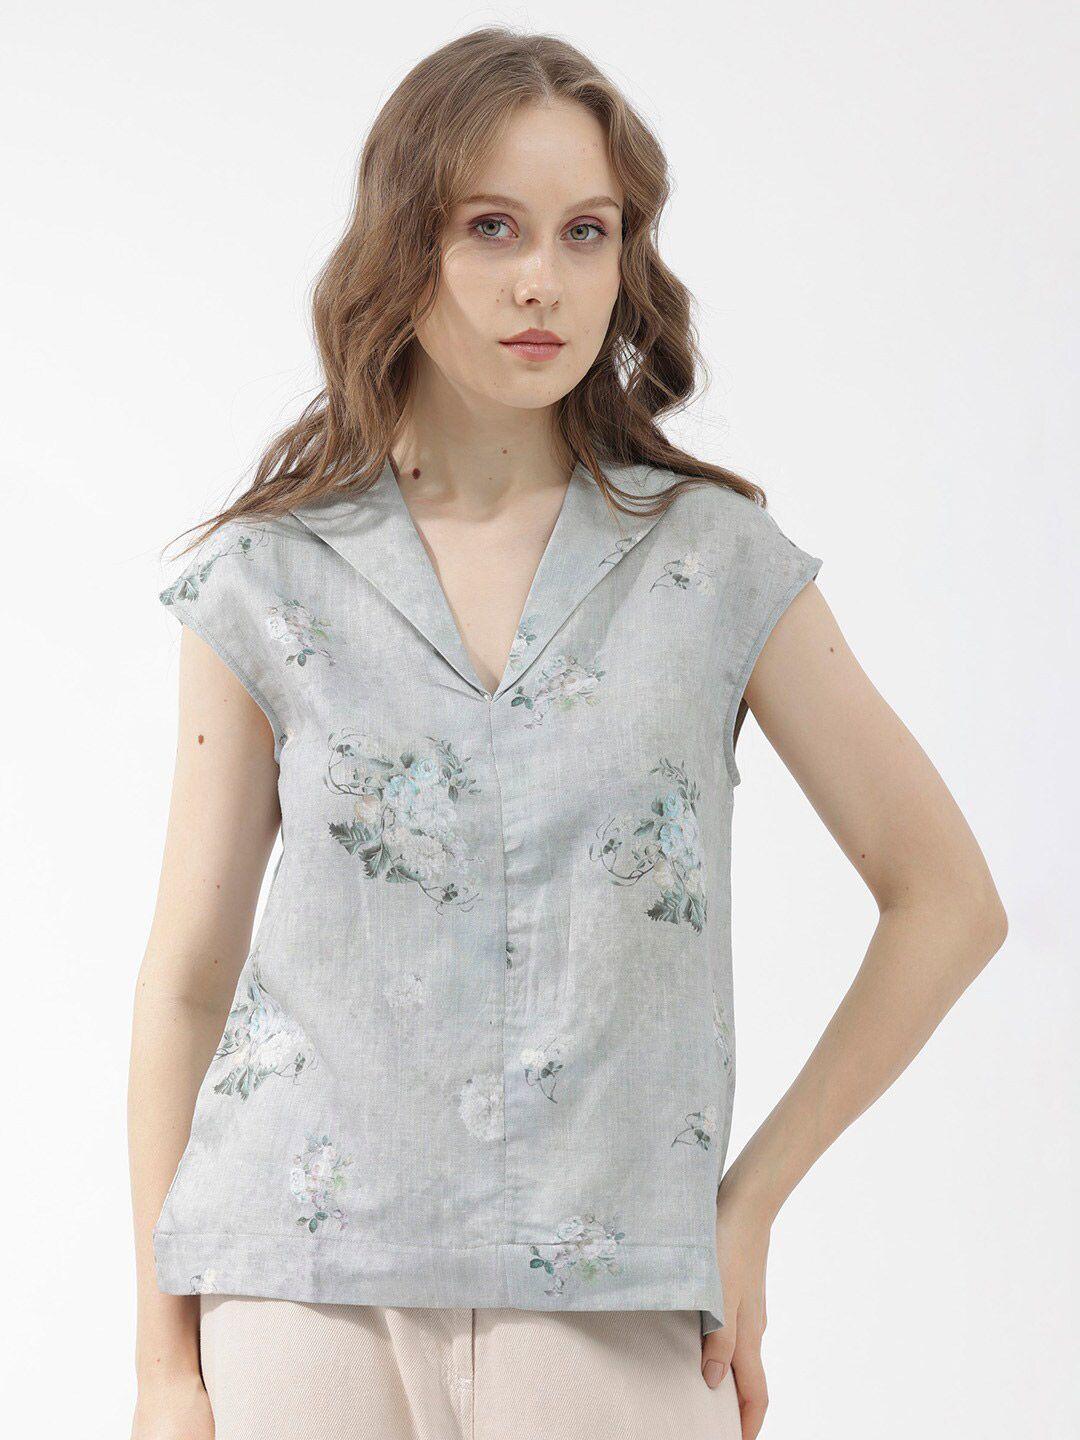 rareism floral printed cotton shirt style top